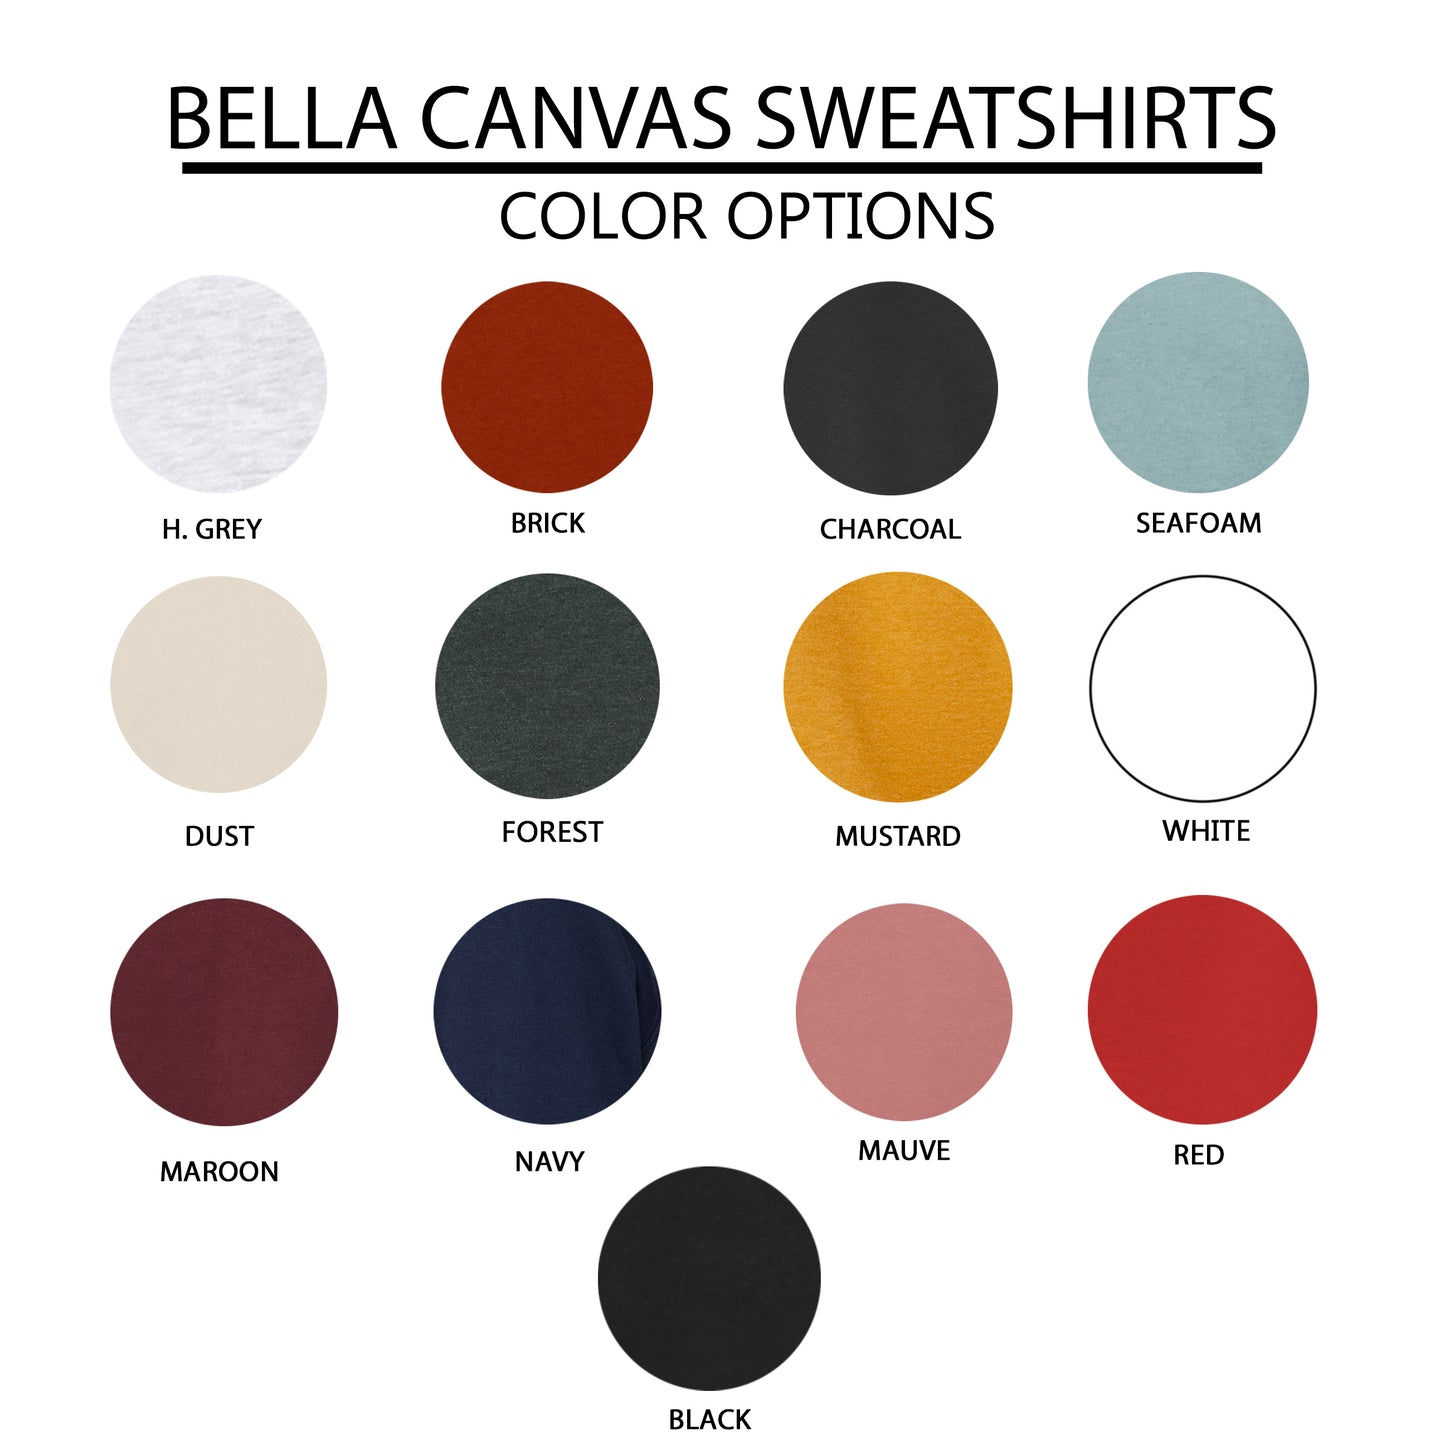 I Vibe Heavy With God | Bella Canvas Premium Sweatshirt